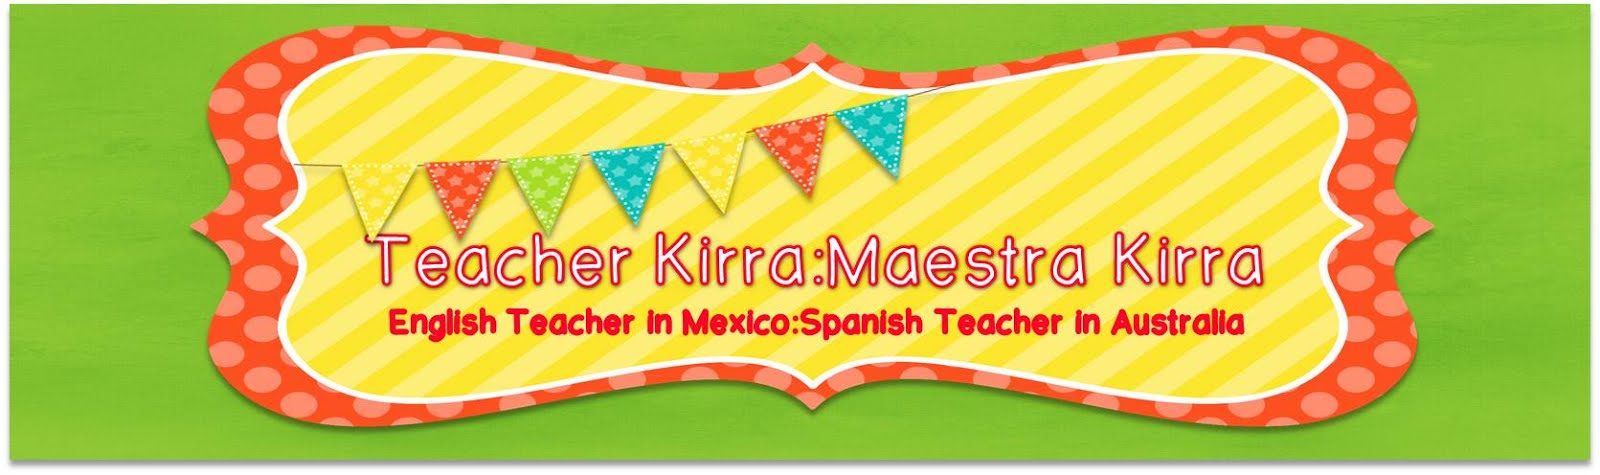 Teacher Kirra:Maestra Kirra